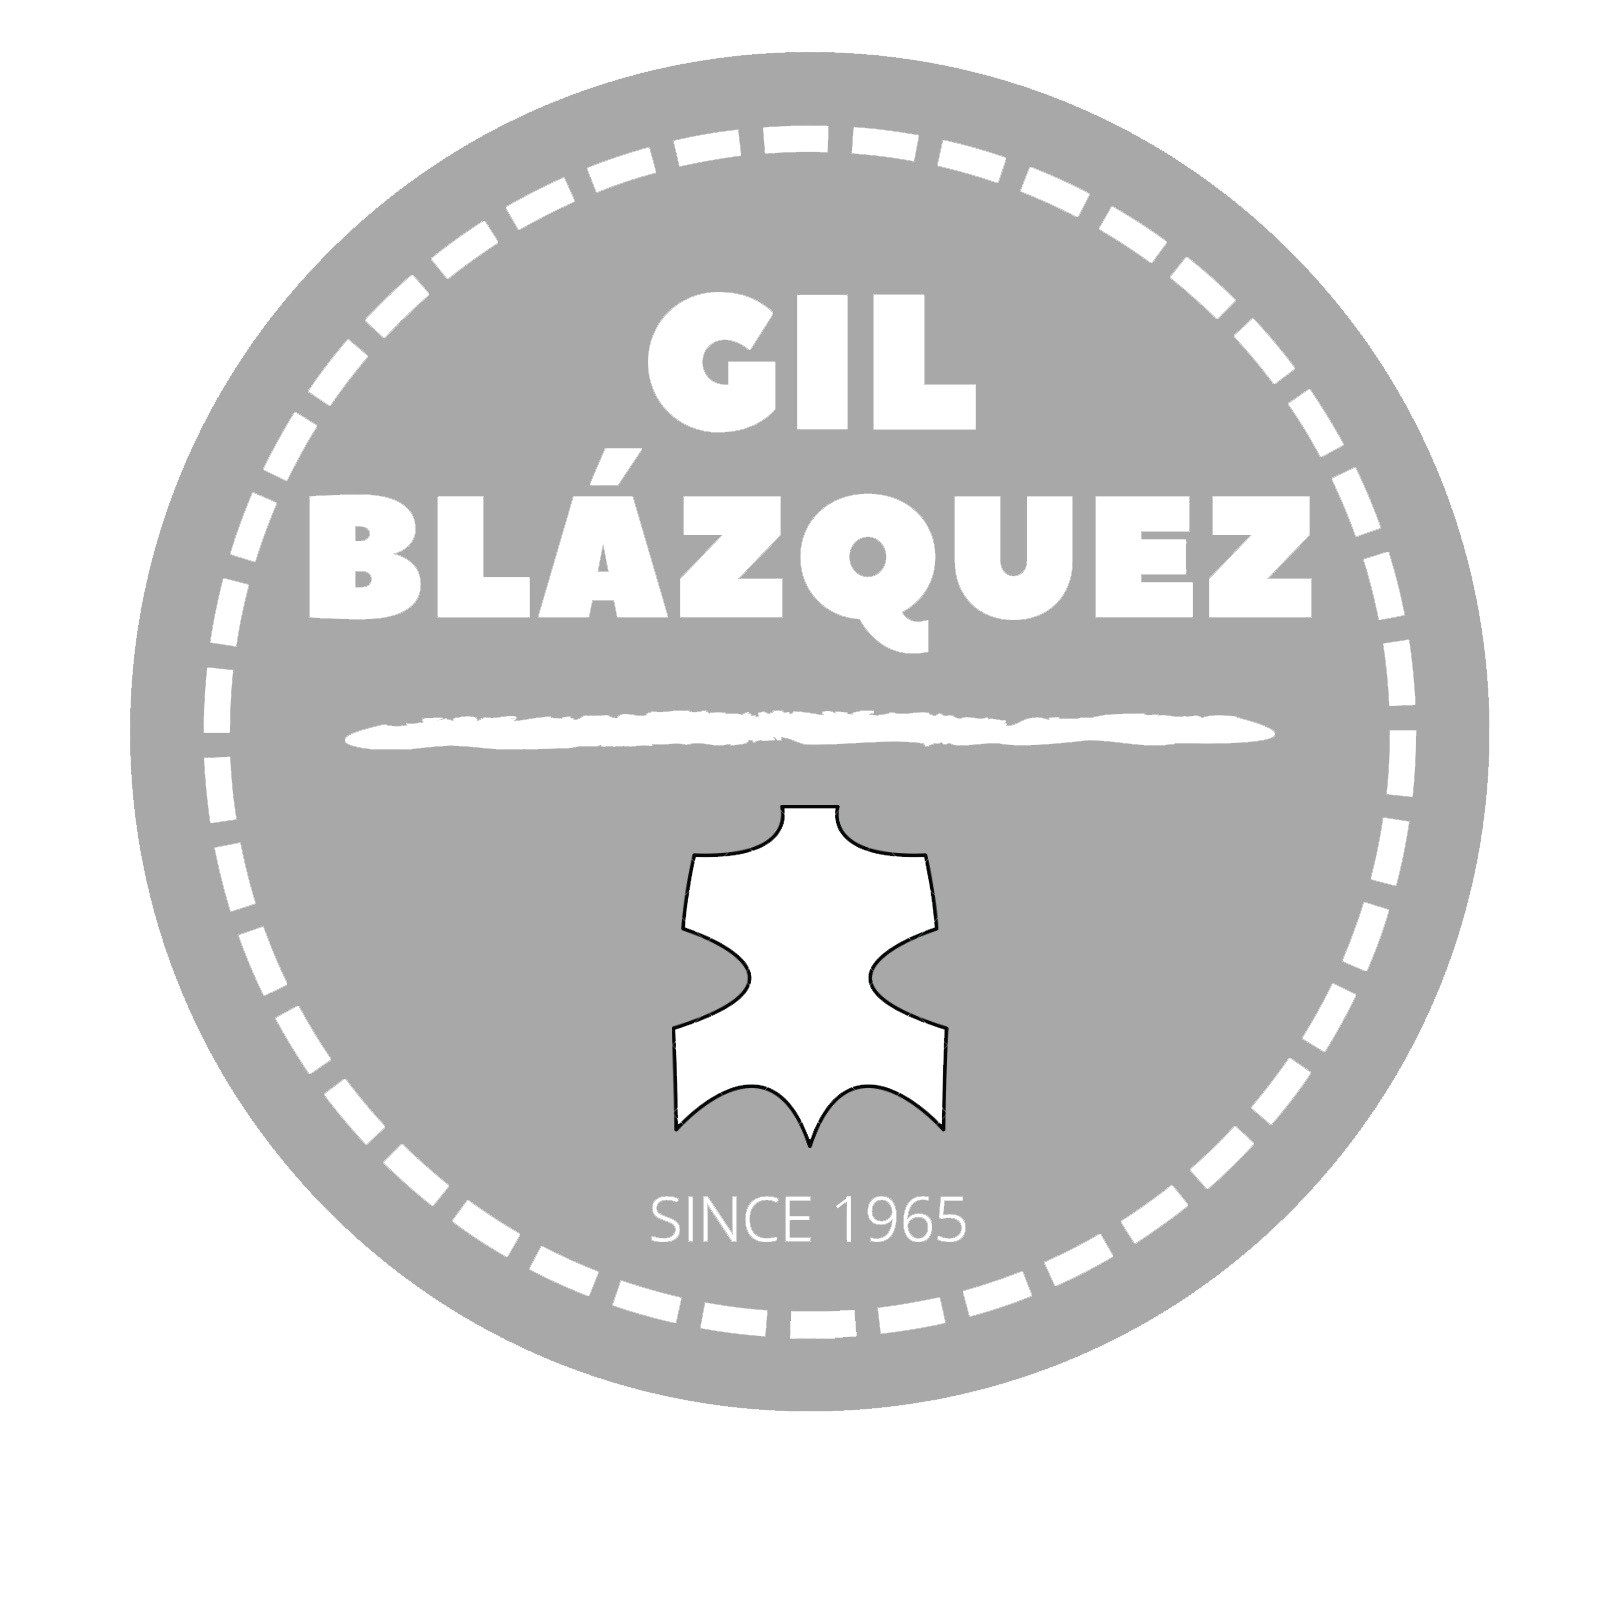 Gil Blazquez